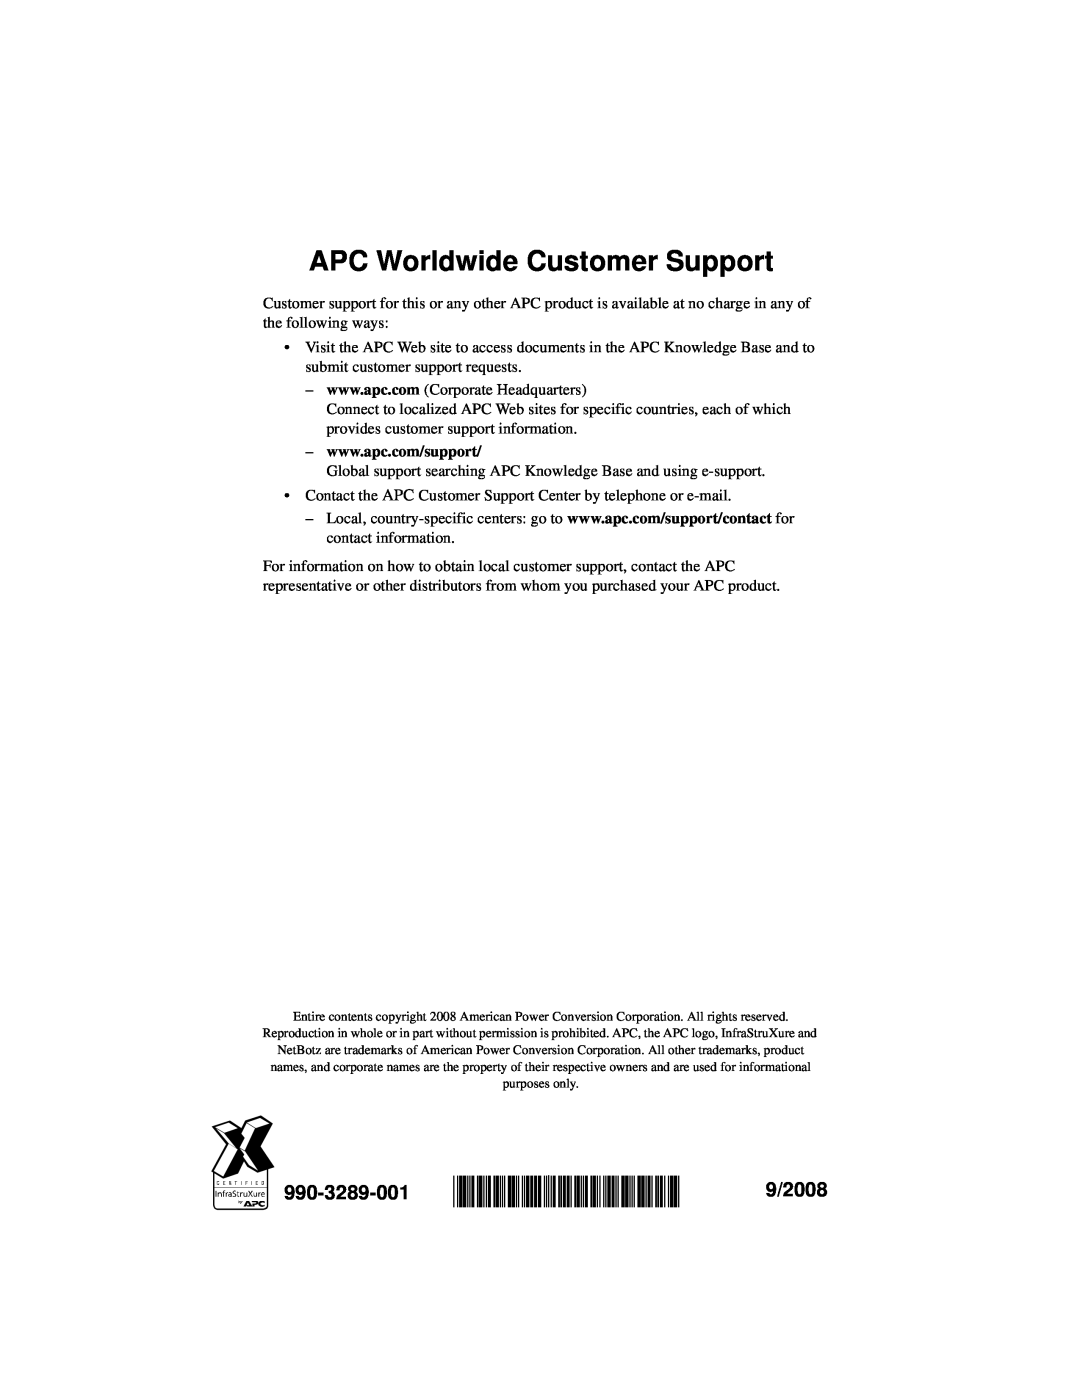 APC NBPD0155 installation manual 990-3289-001 *990-3289-001, APC Worldwide Customer Support, 9/2008 